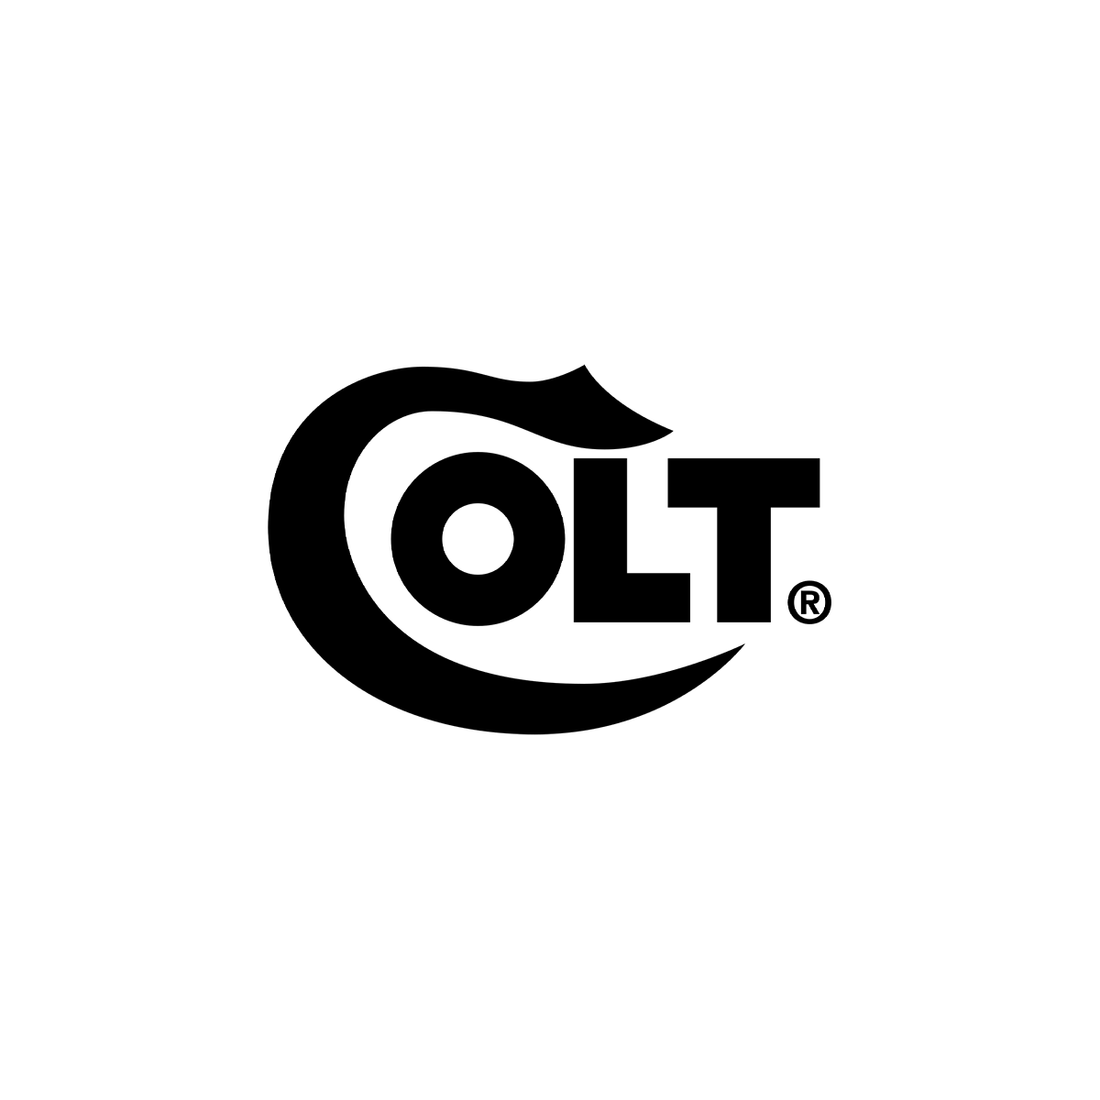 Colt OWB Holsters